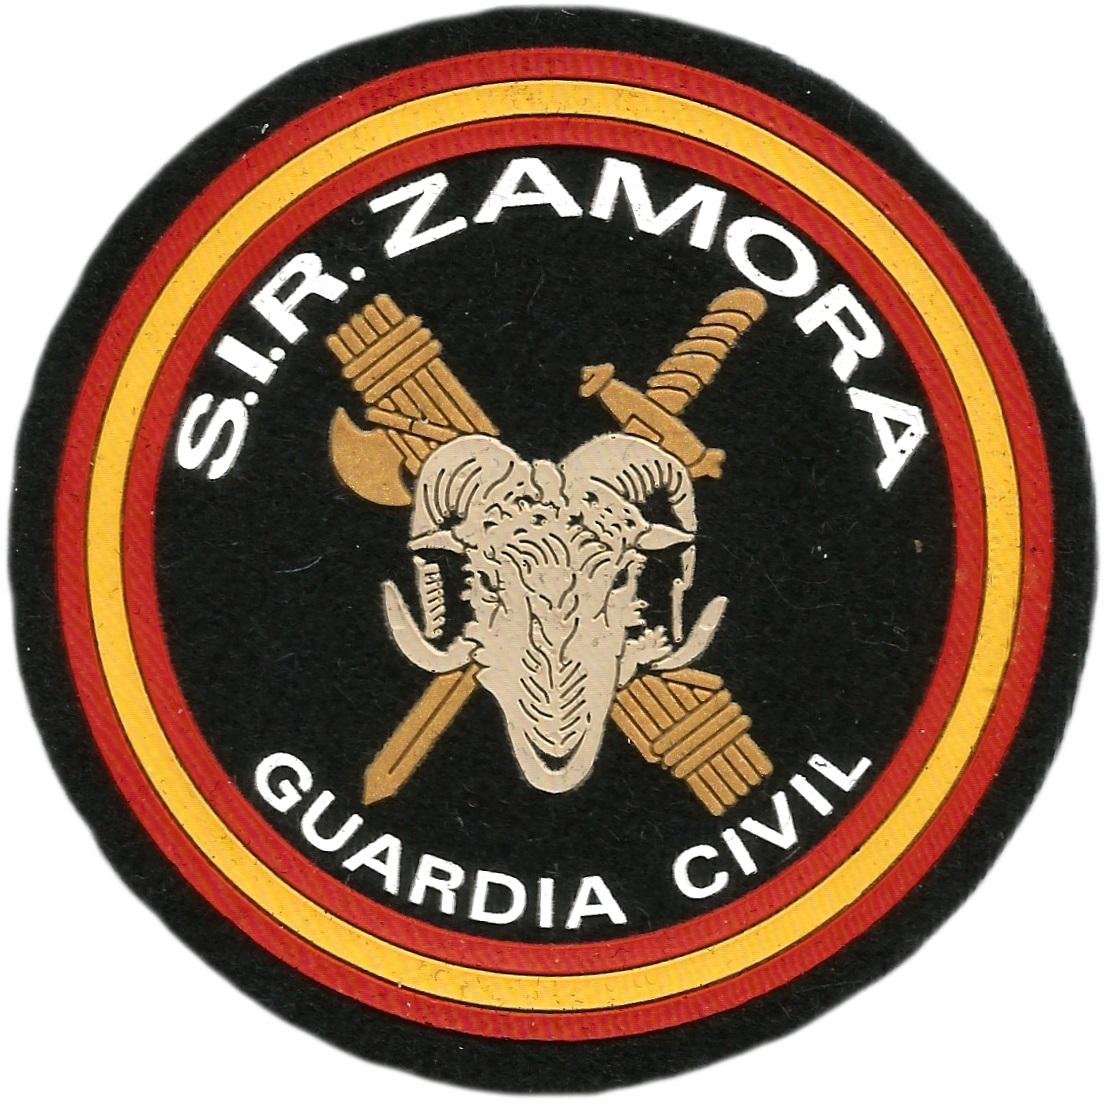 Guardia Civil SIR Zamora parche insignia emblema distintivo